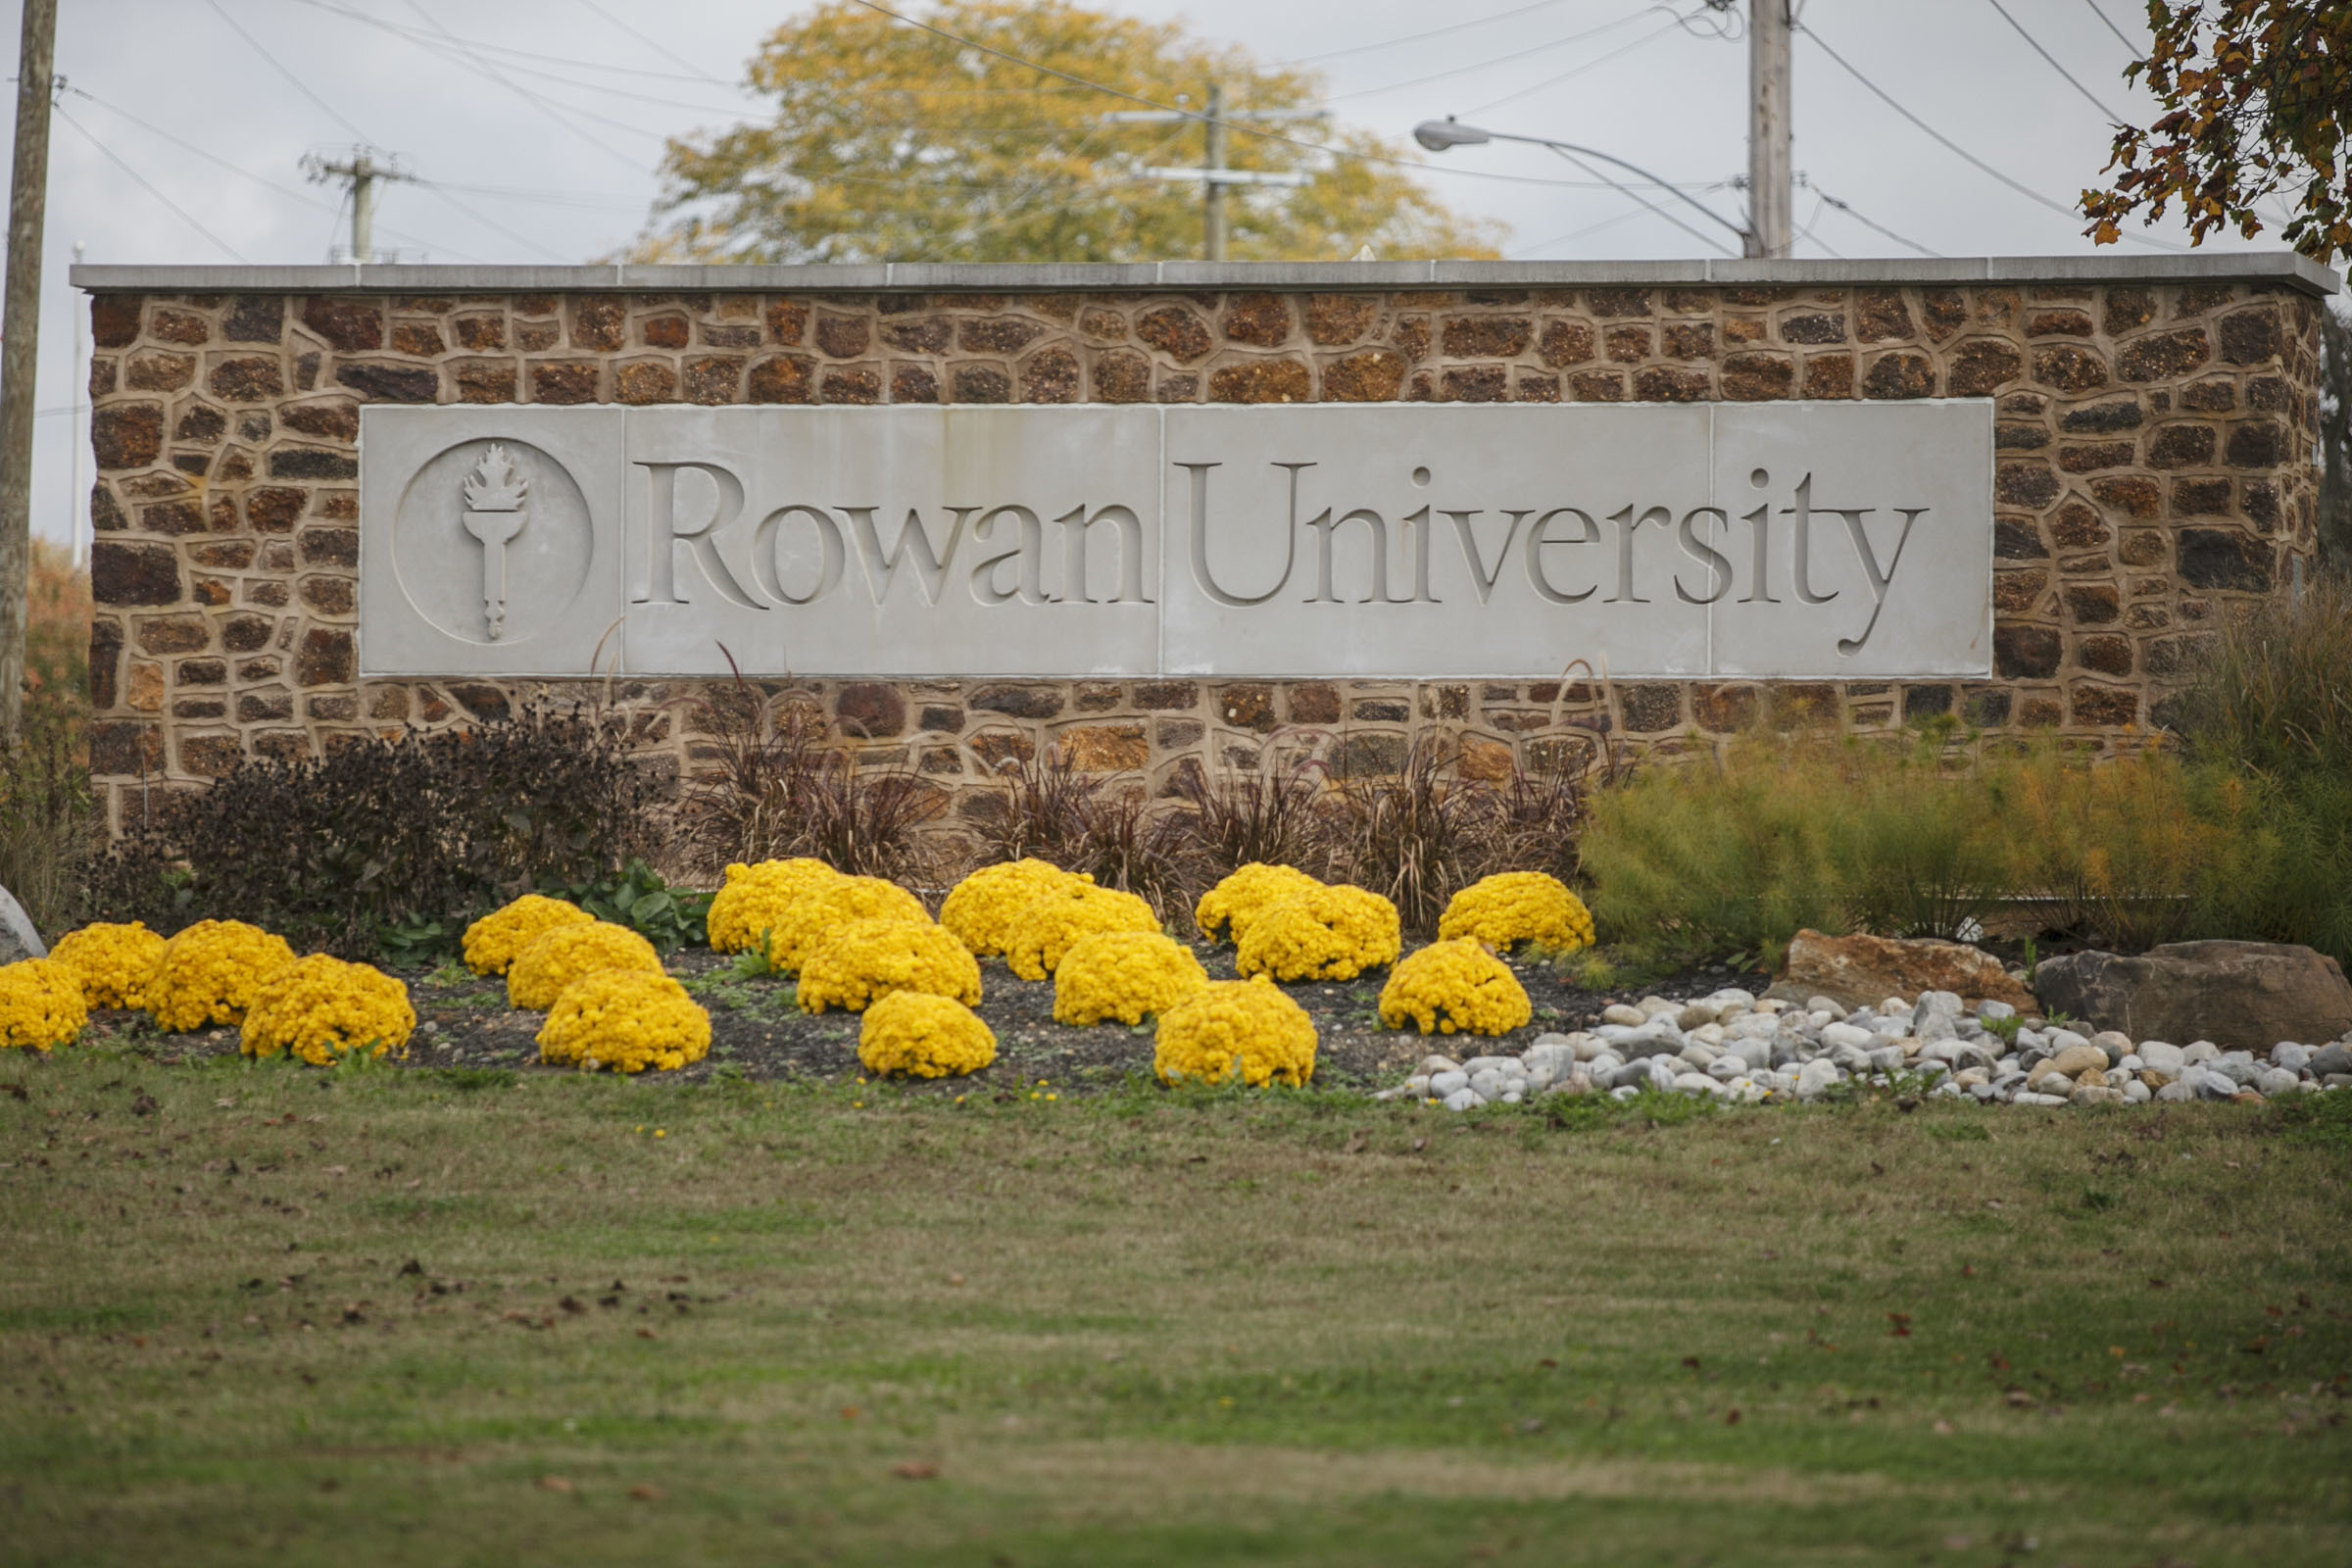 The week after a racial slur was left on a Rowan freshman's door